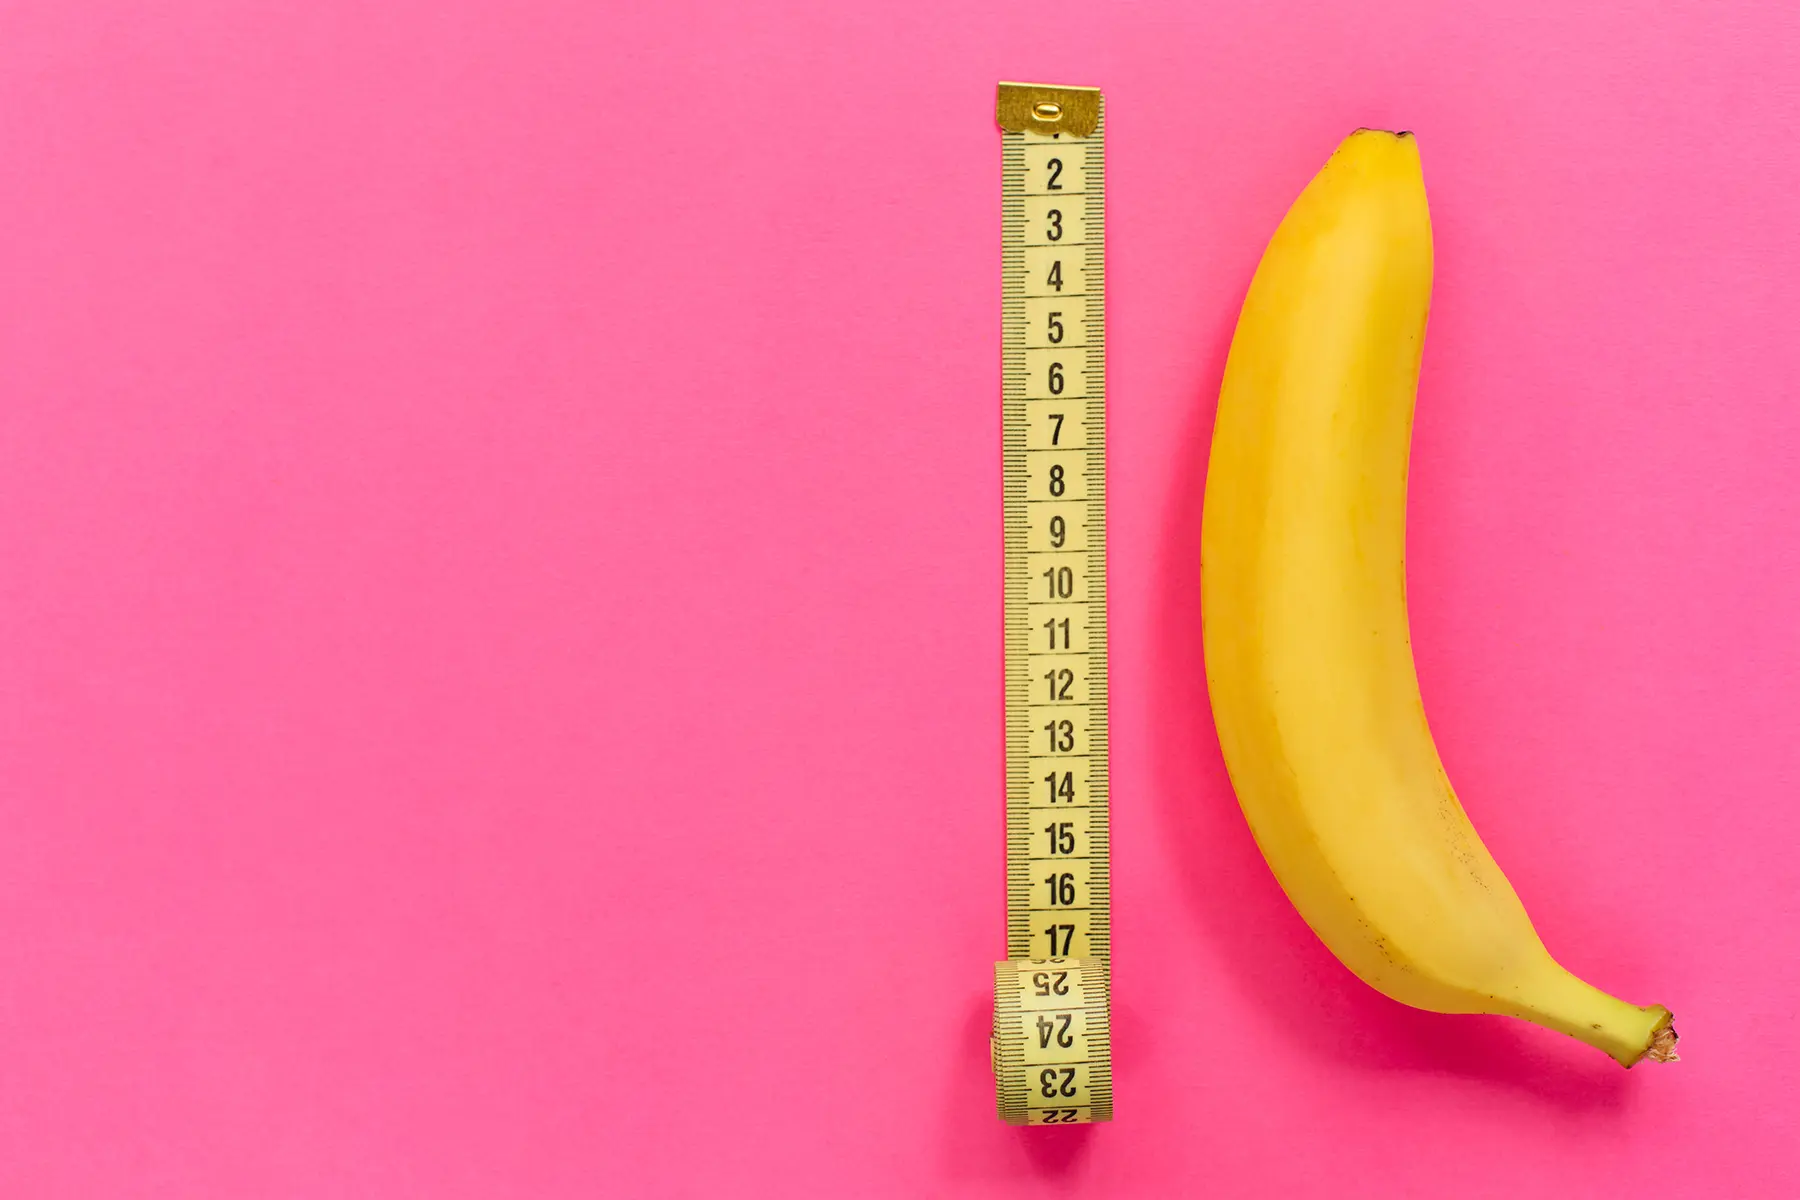 Measuring banana